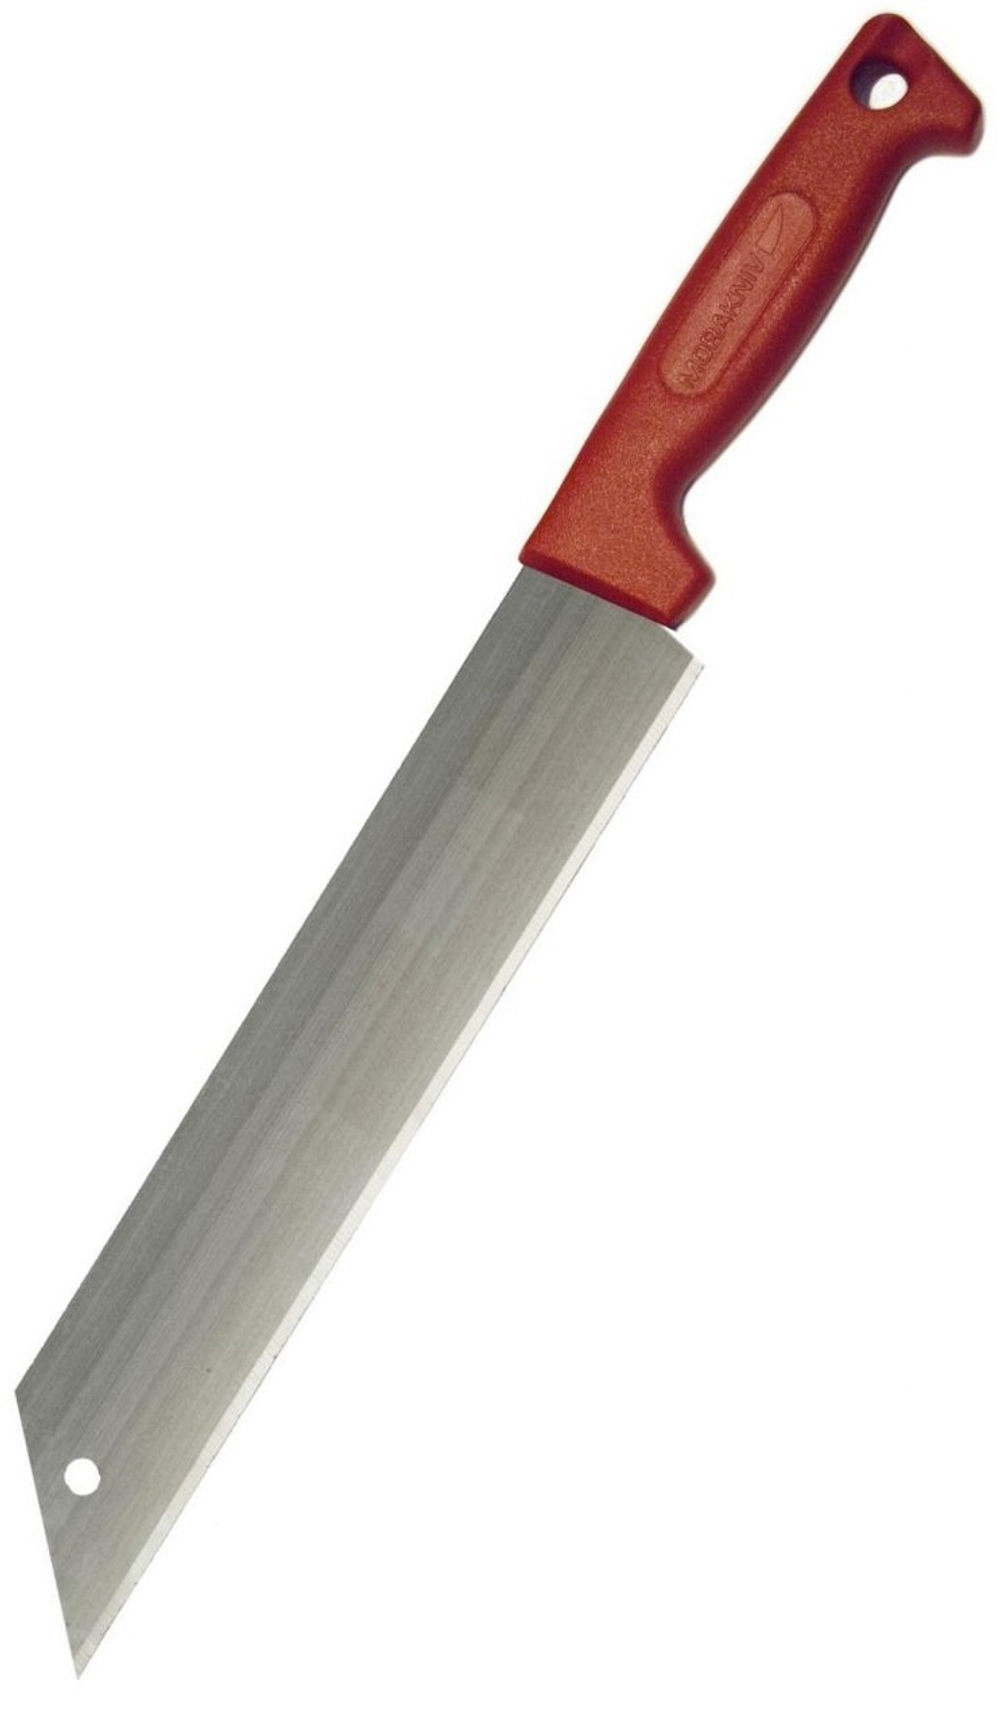 Нож Morakniv Insulation Knife 1442, арт. 11612